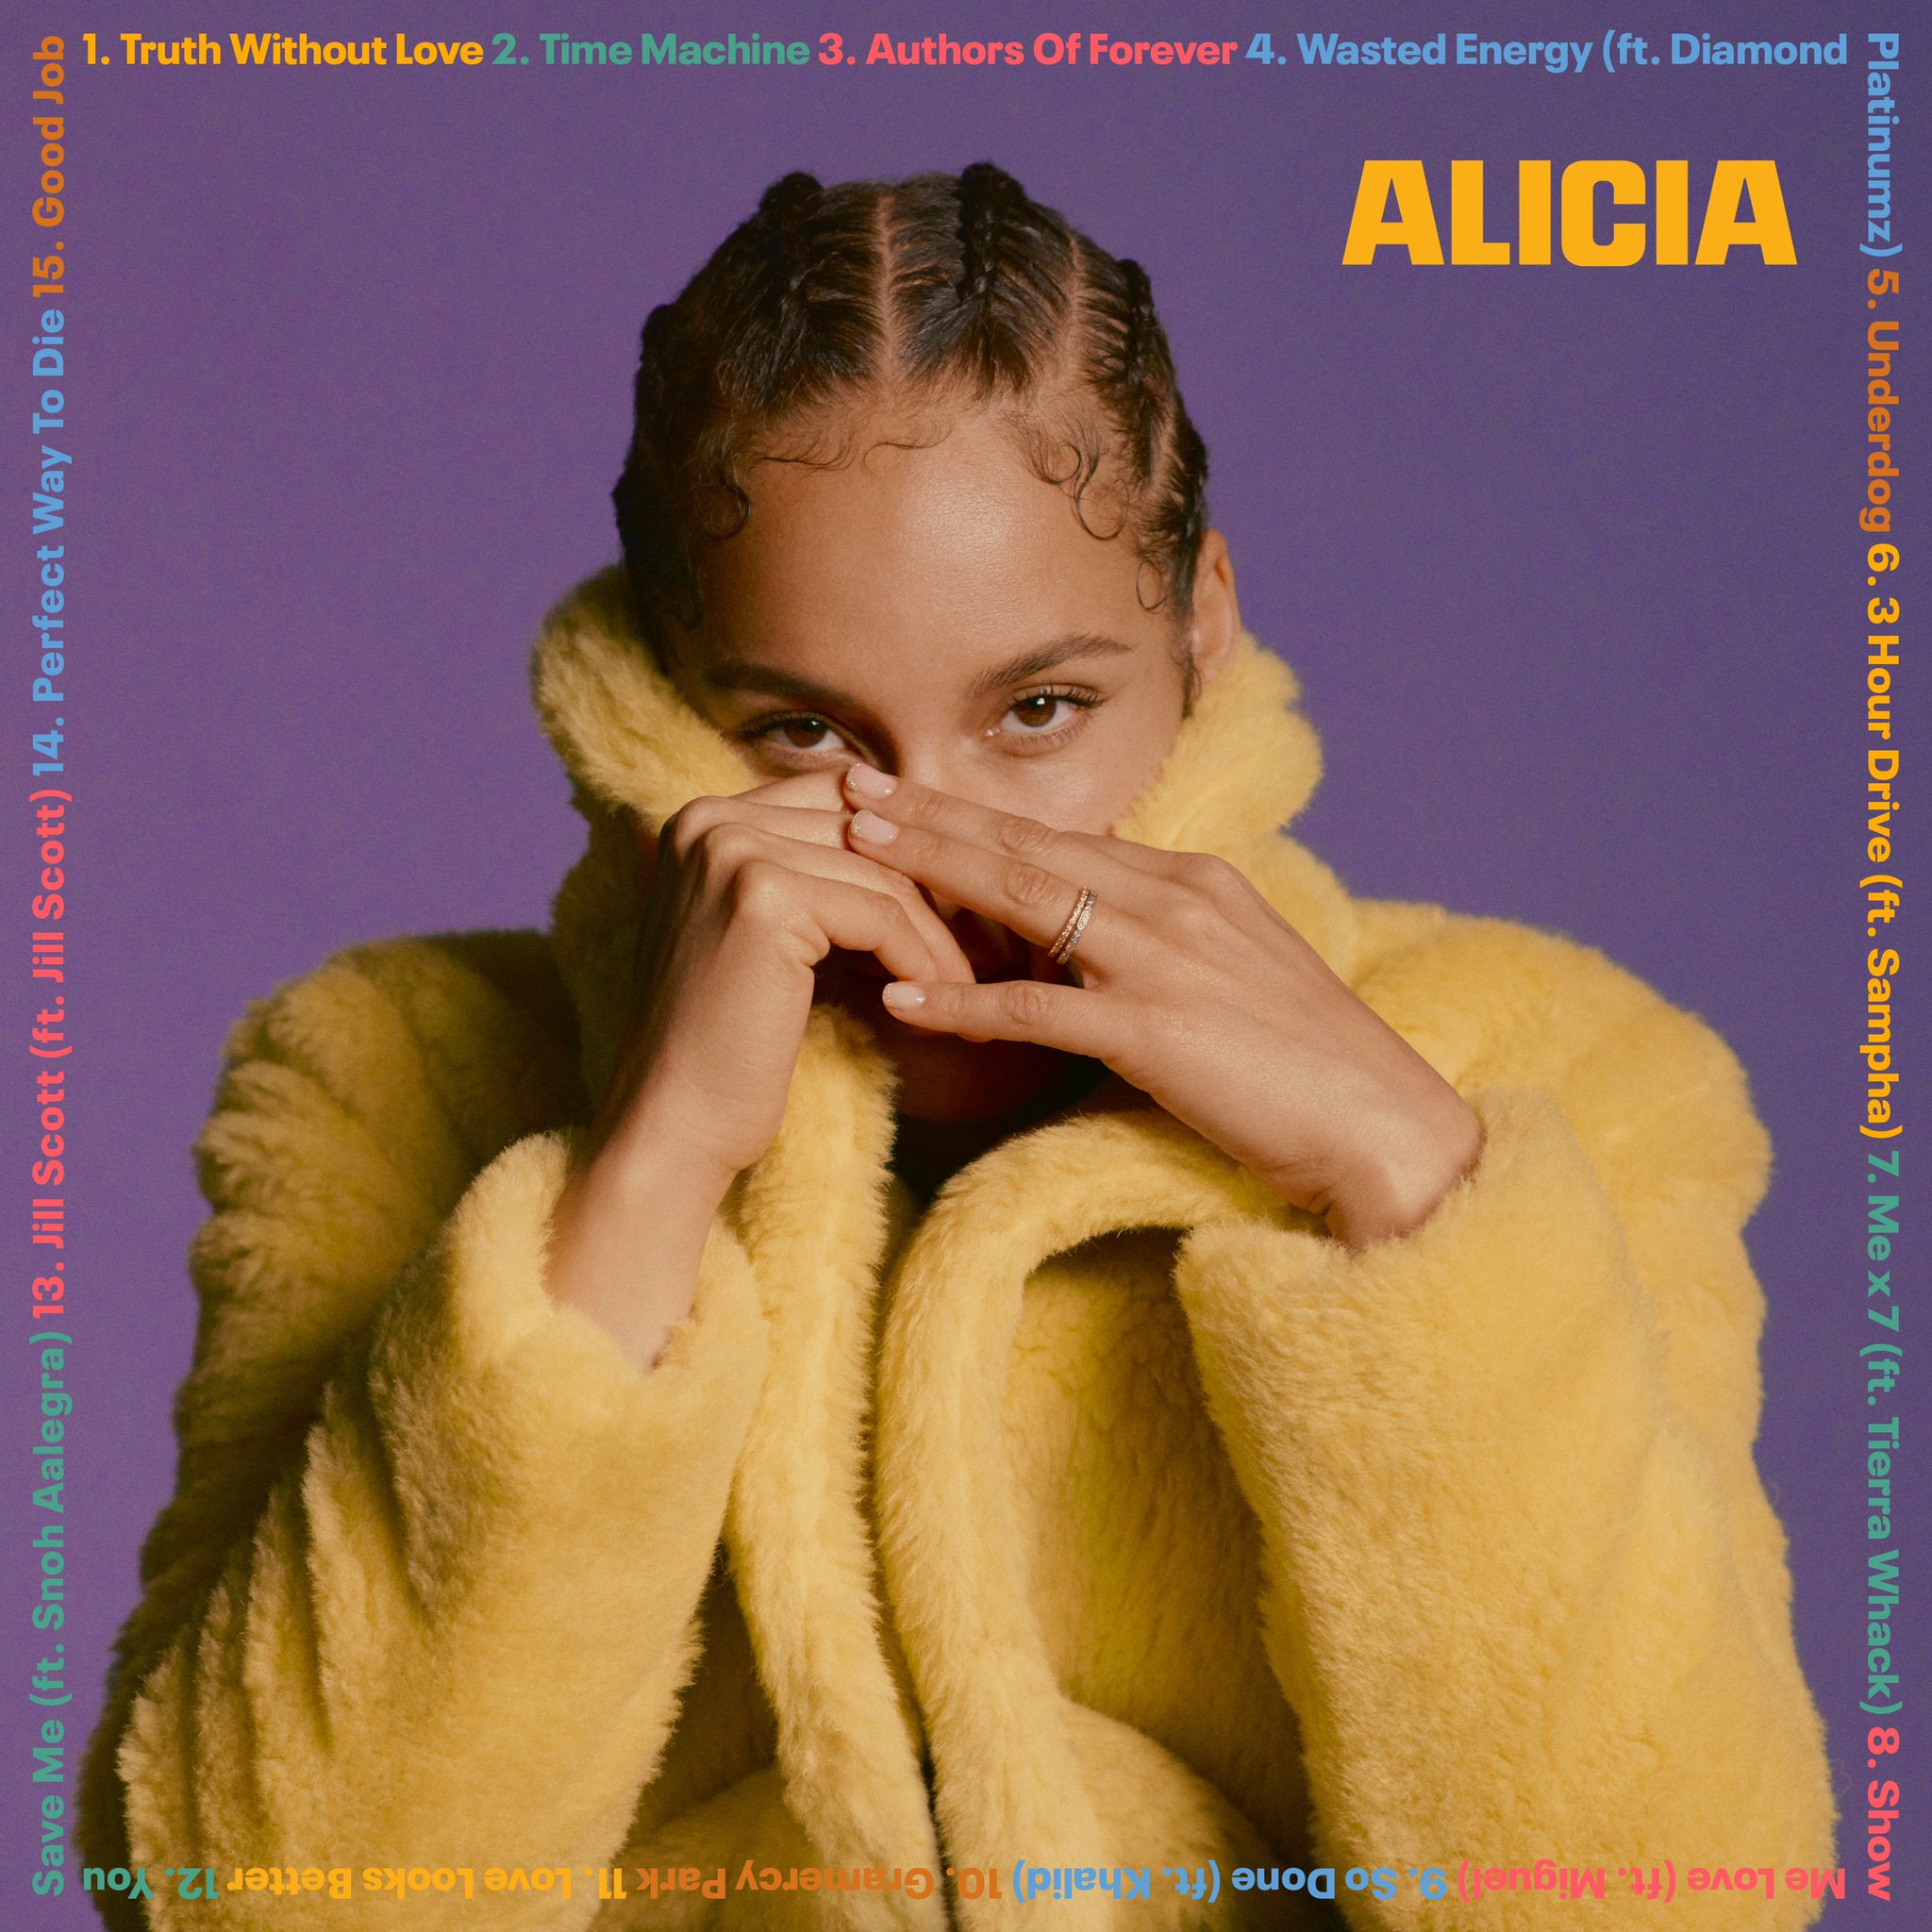 Alicia Keys just dropped a New Album "Alicia" (there's a Diamond Platnumz  feature) | BellaNaija